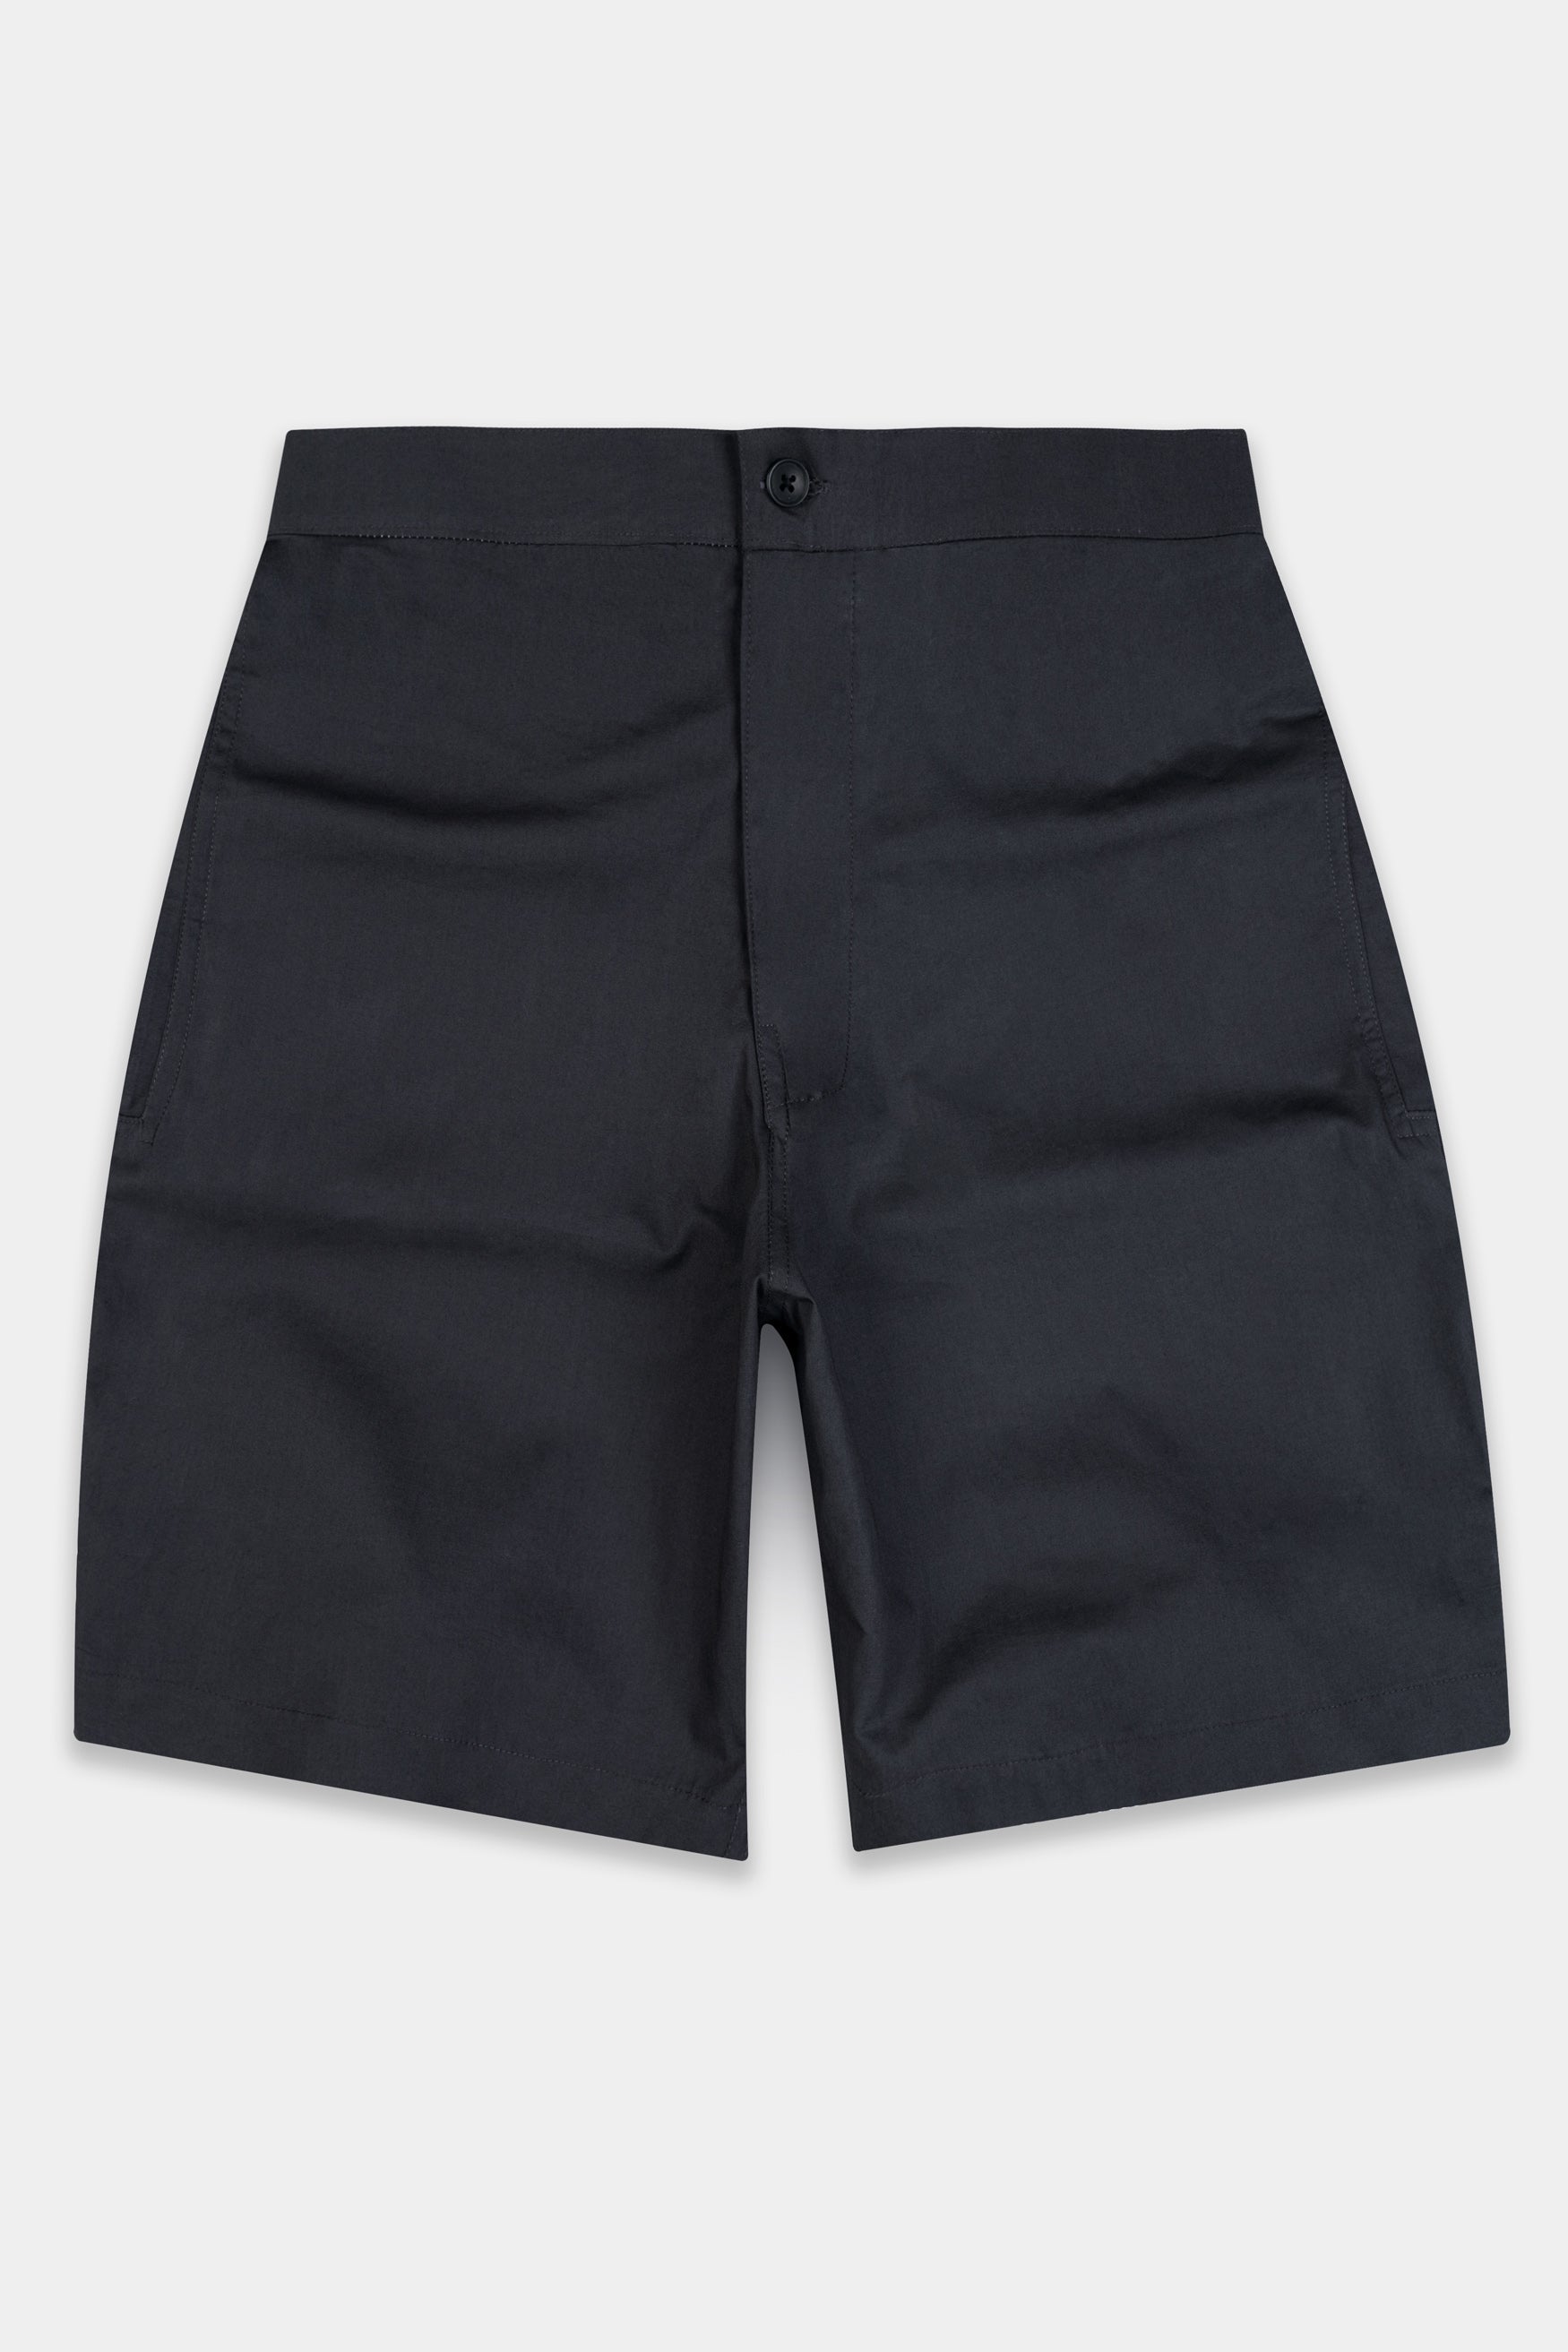 Vulcan Gray Premium Cotton Shorts